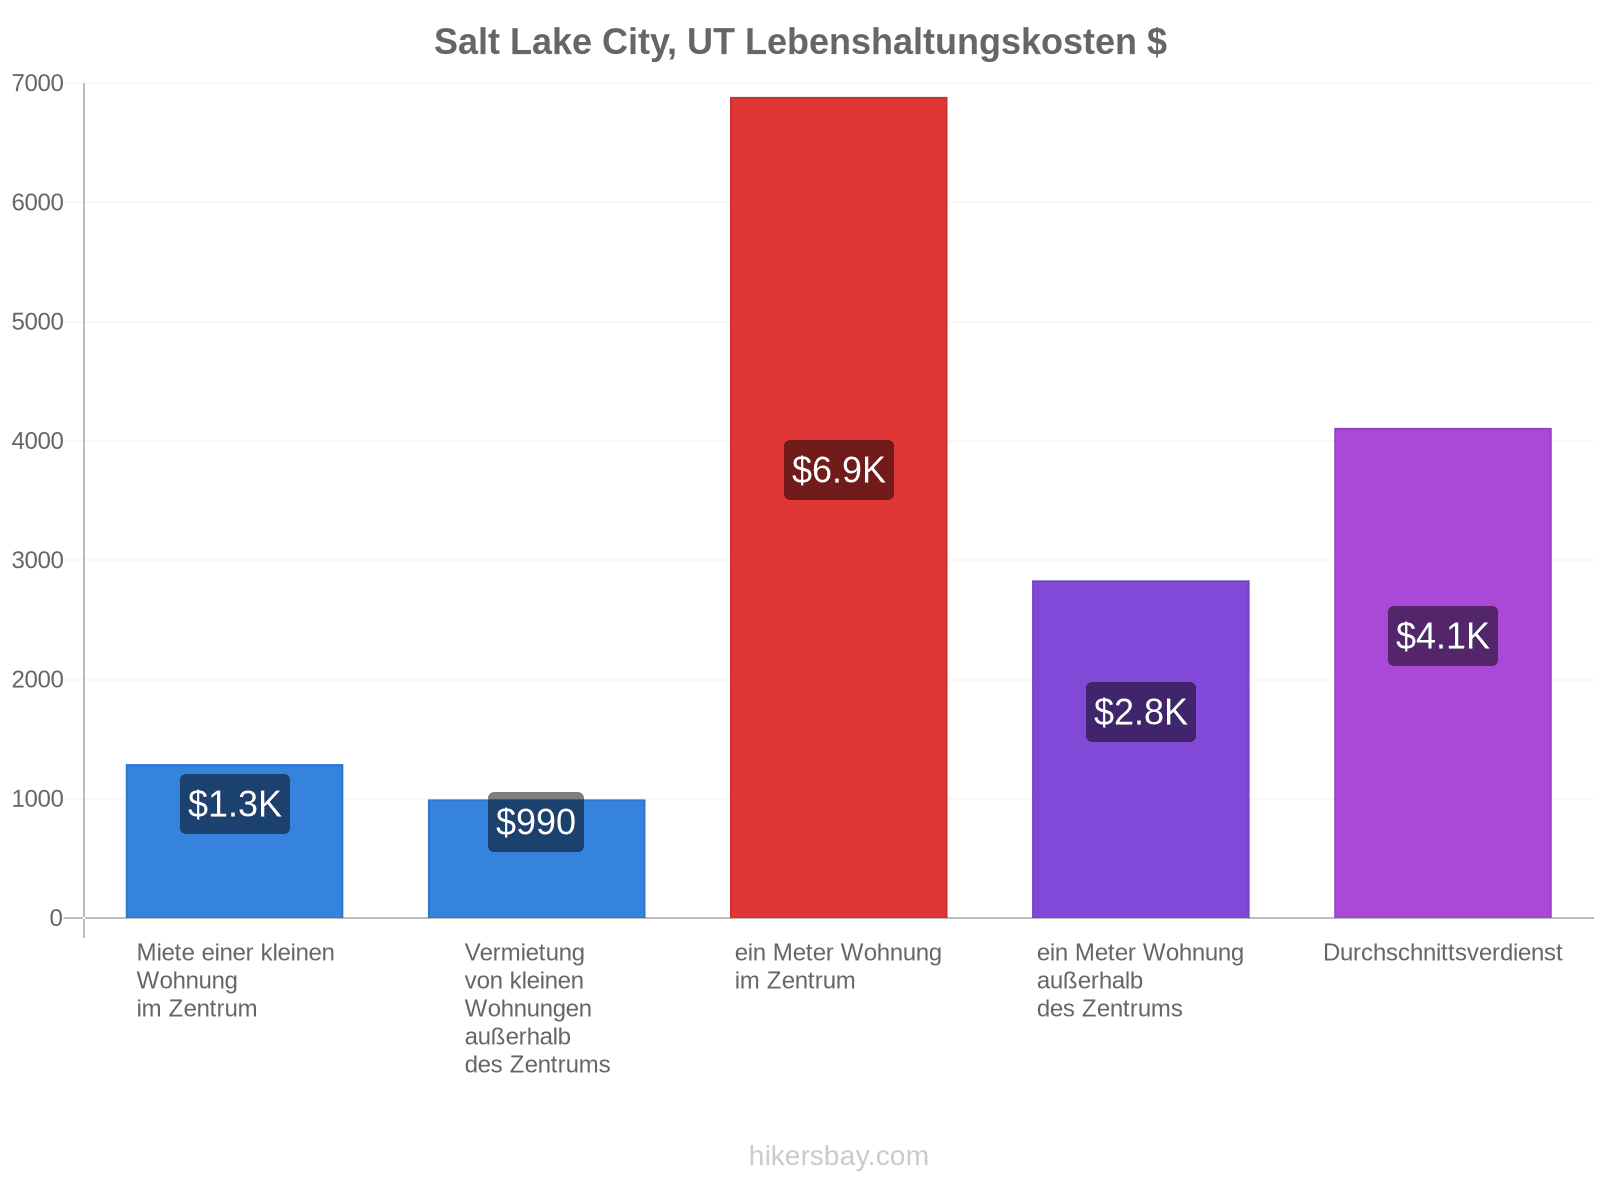 Salt Lake City, UT Lebenshaltungskosten hikersbay.com